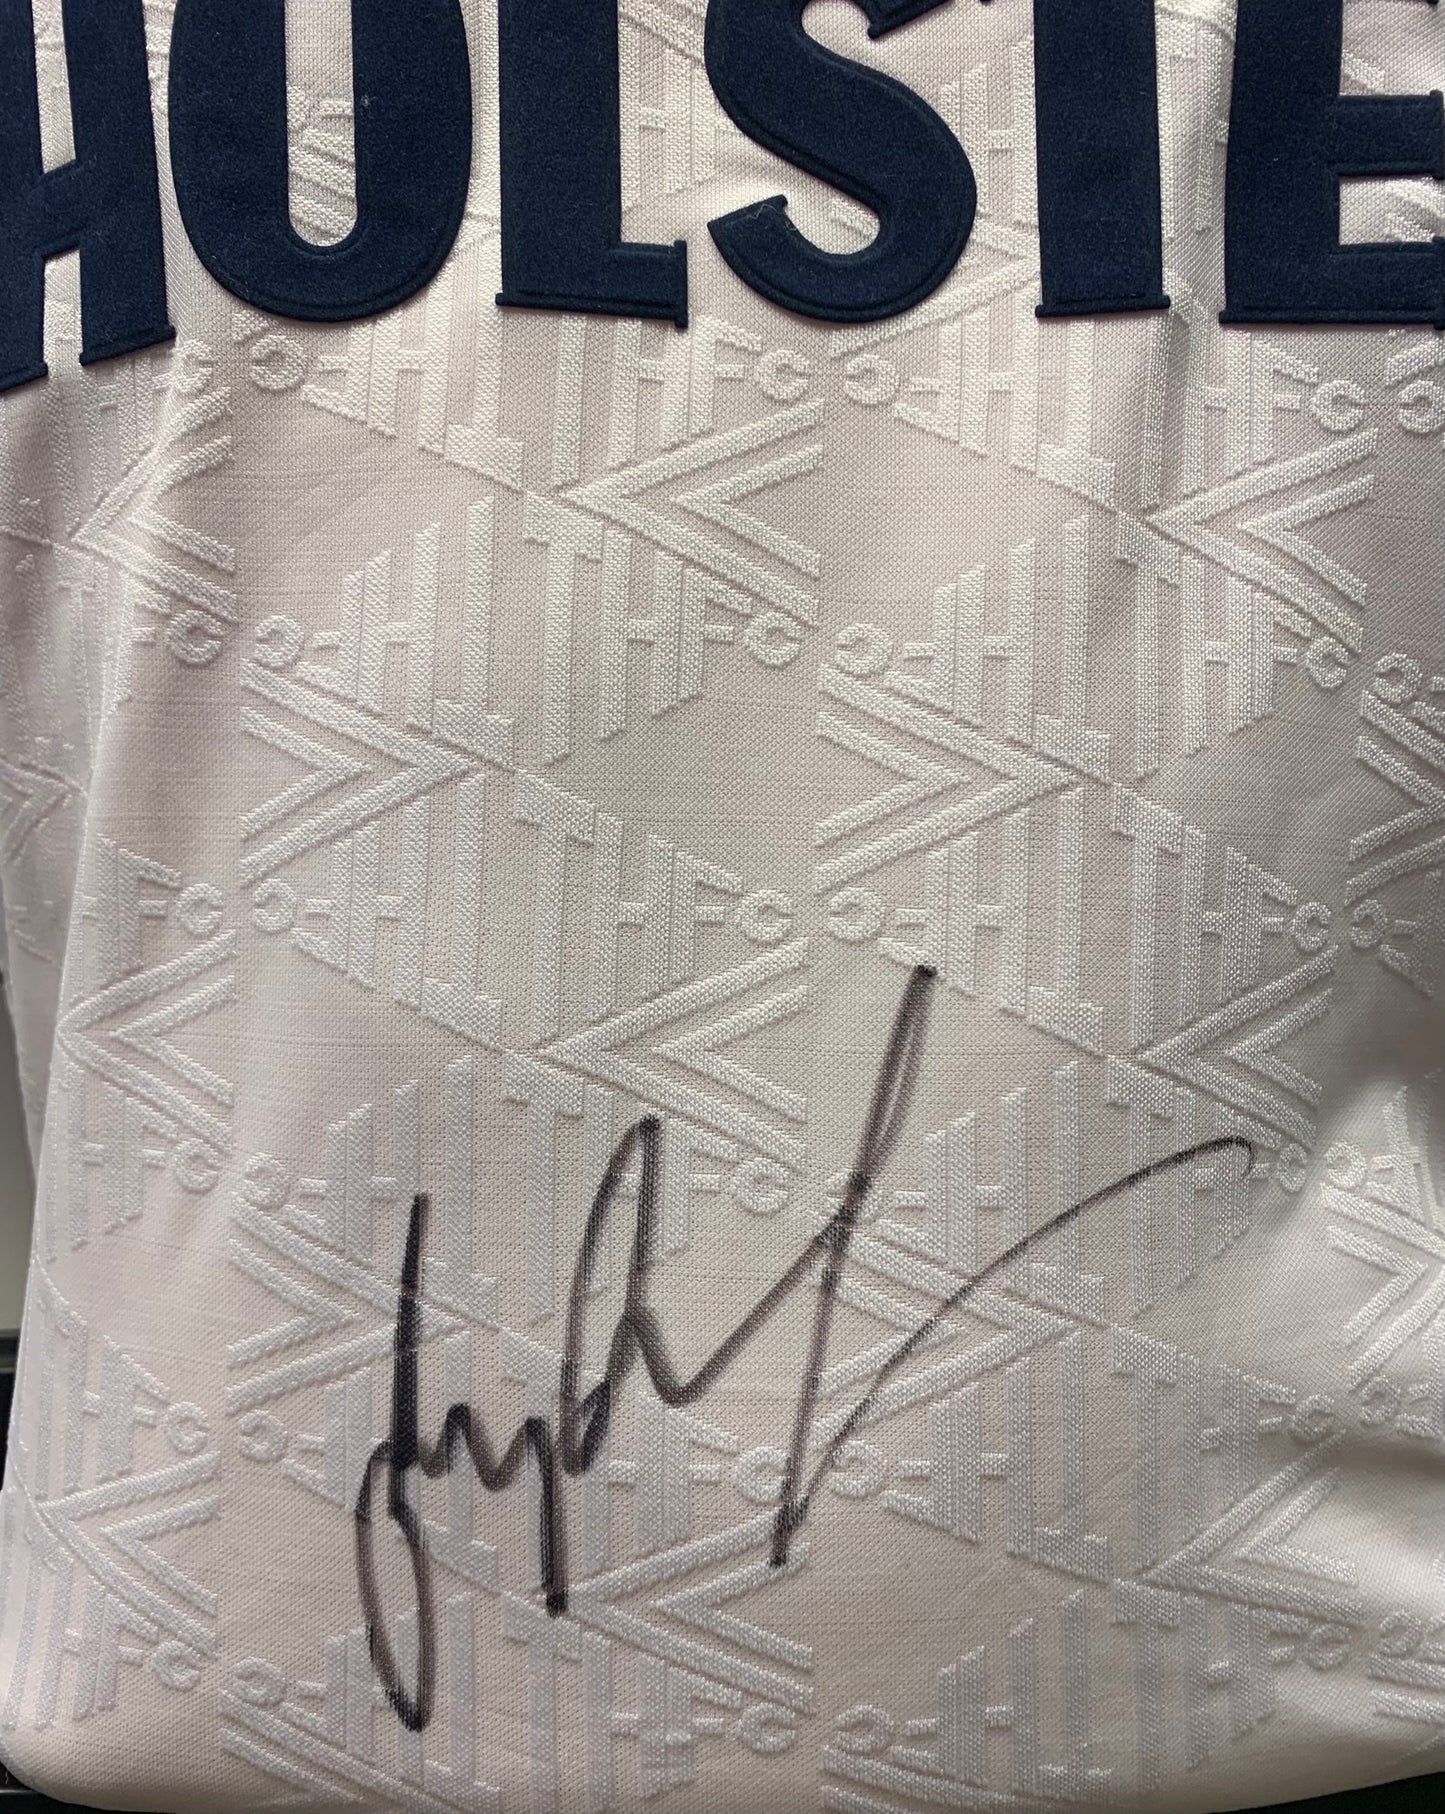 Gary Lineker - Tottenham Hotspur FC - hand-signed replica shirt - THFC memorabilia, football shirt